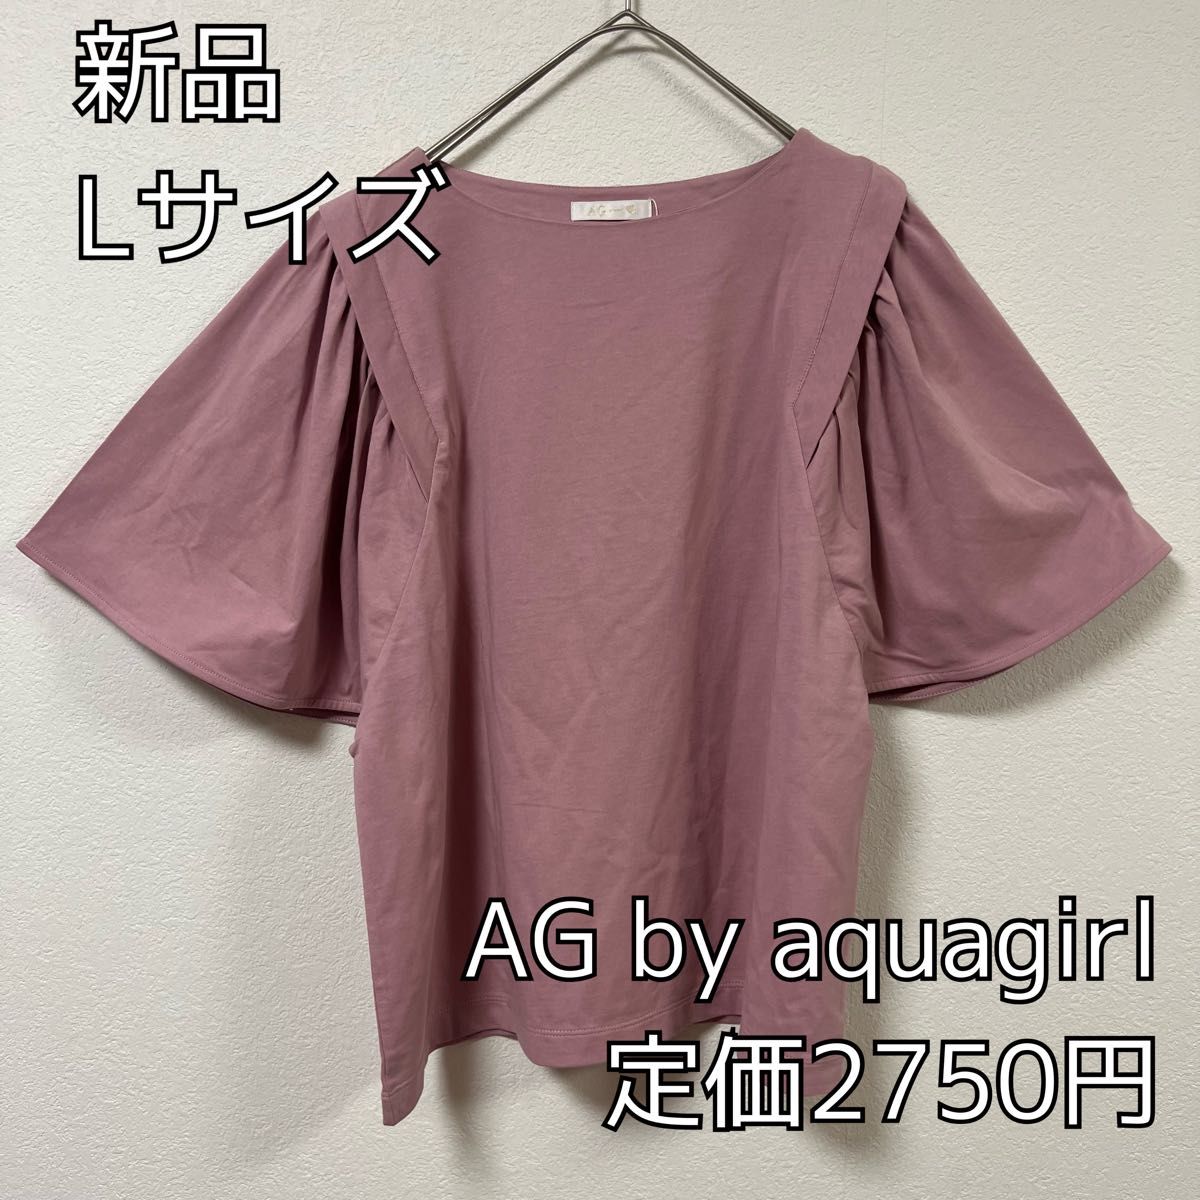 3645 AG by aquagirl 半袖カットソー Tシャツ